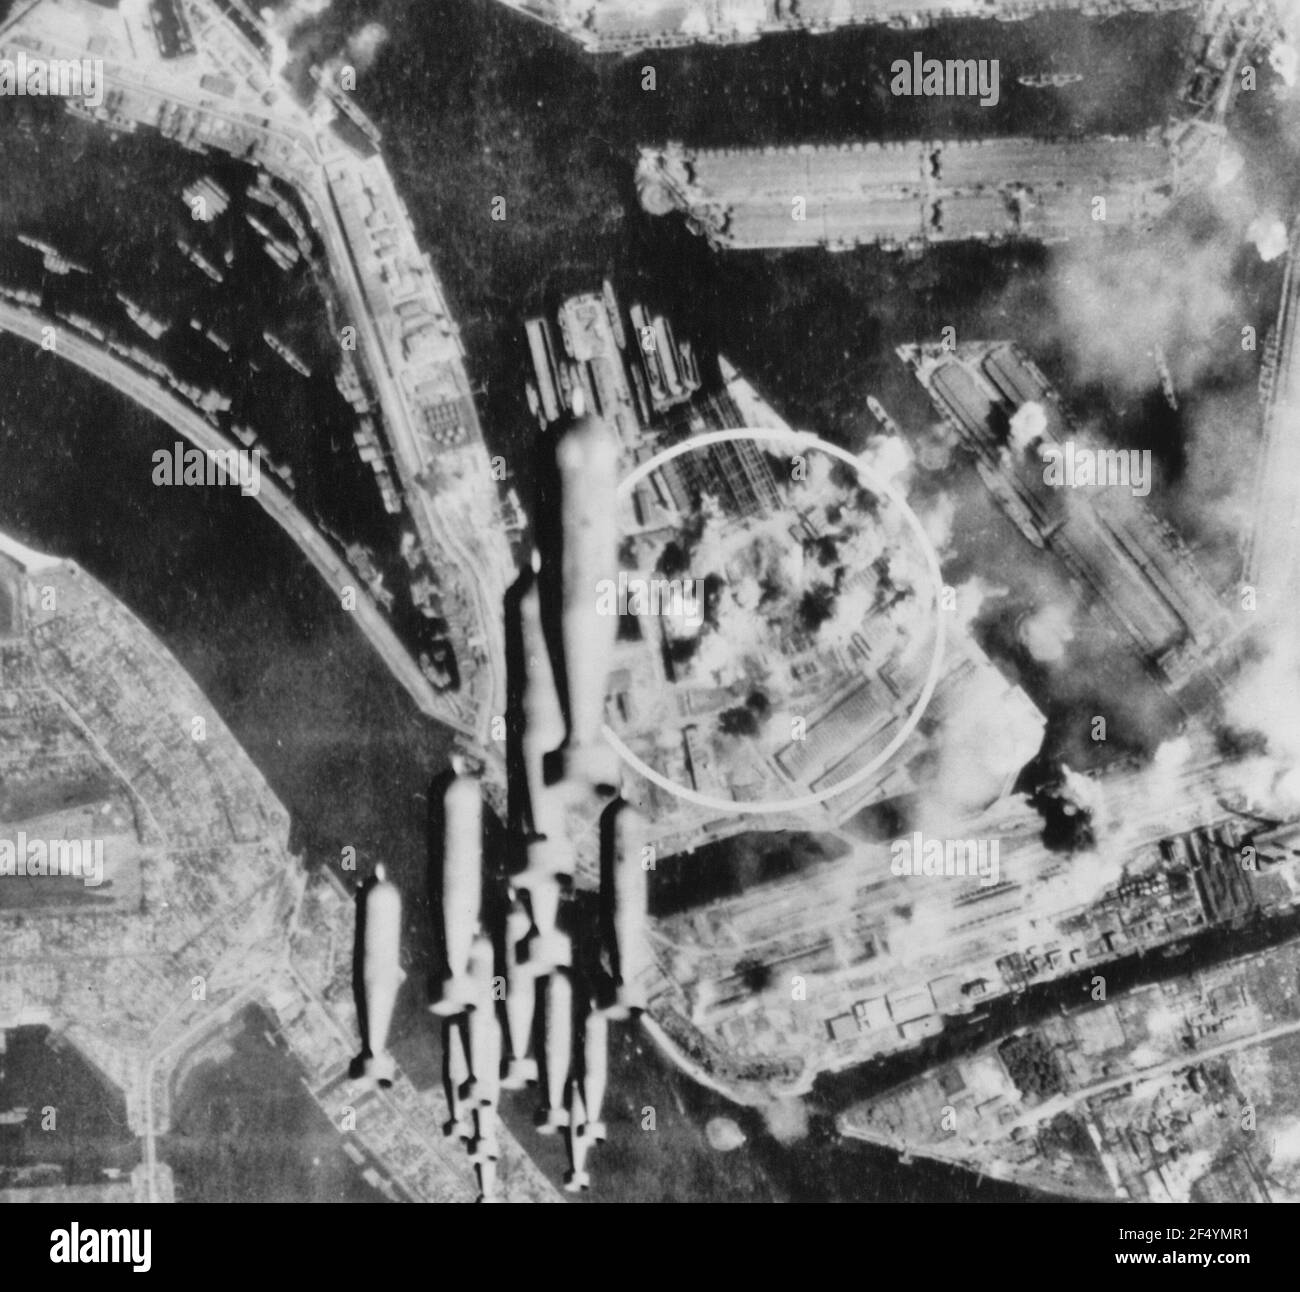 Bombing of  Ship Yard, Hamburg, Germany - July 26, 1943 Stock Photo